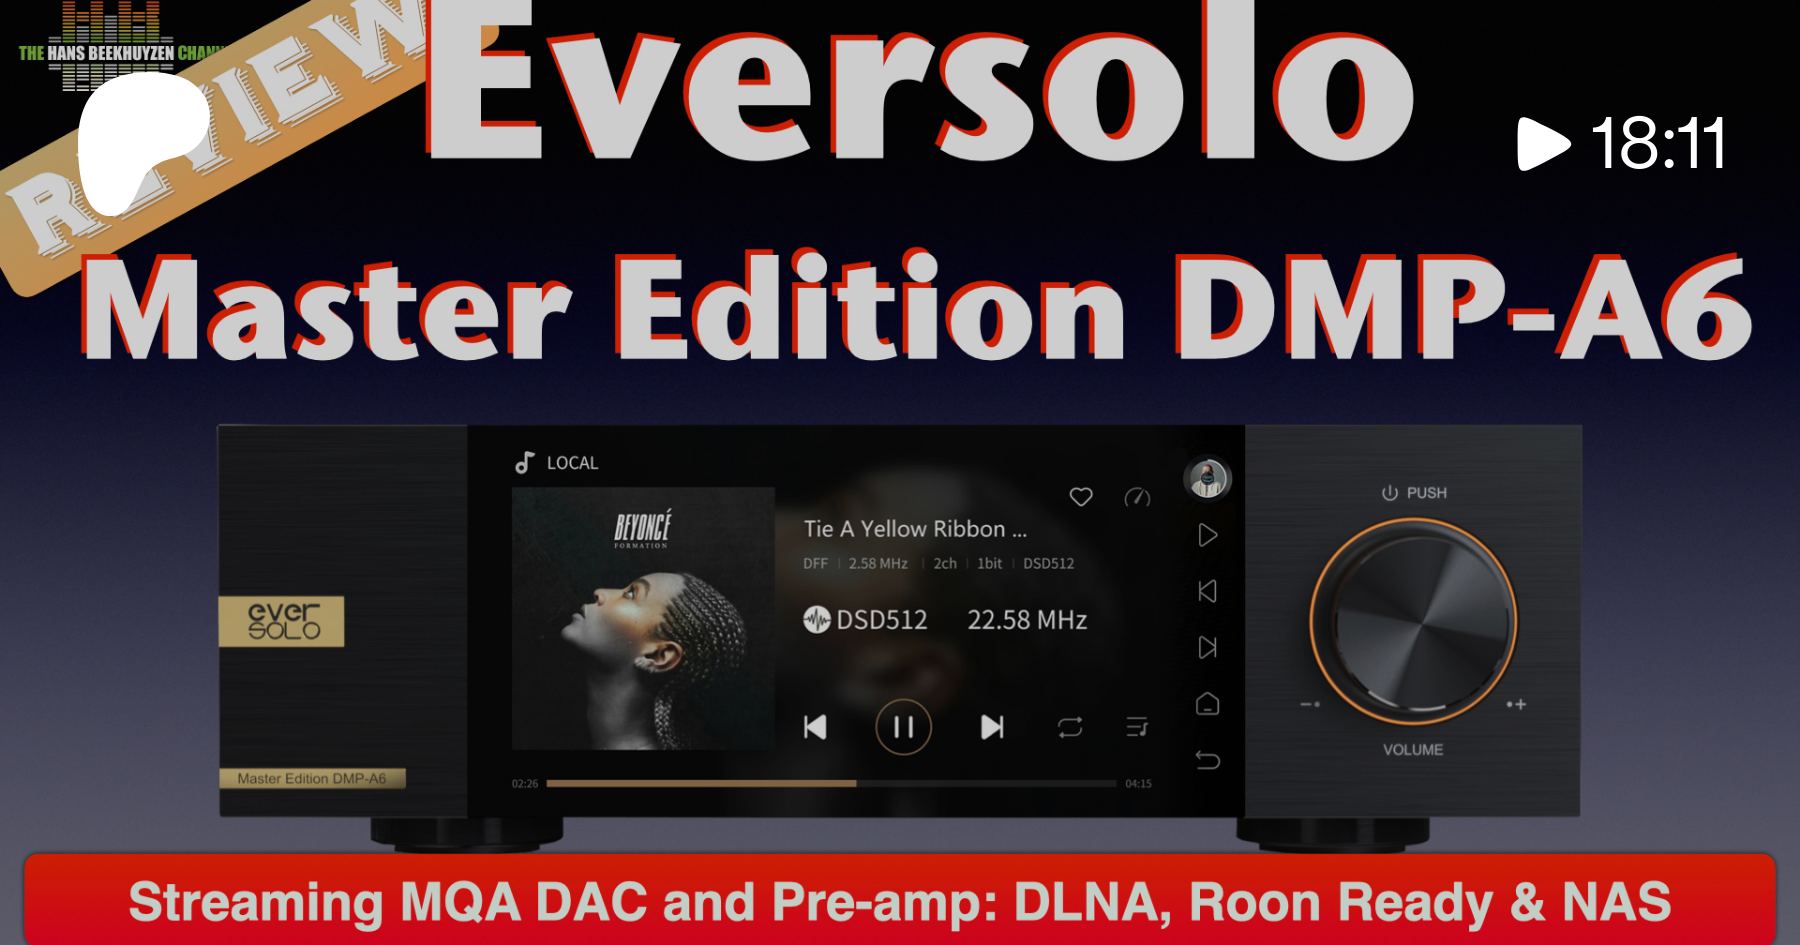 Eversolo DMP-A6 video review